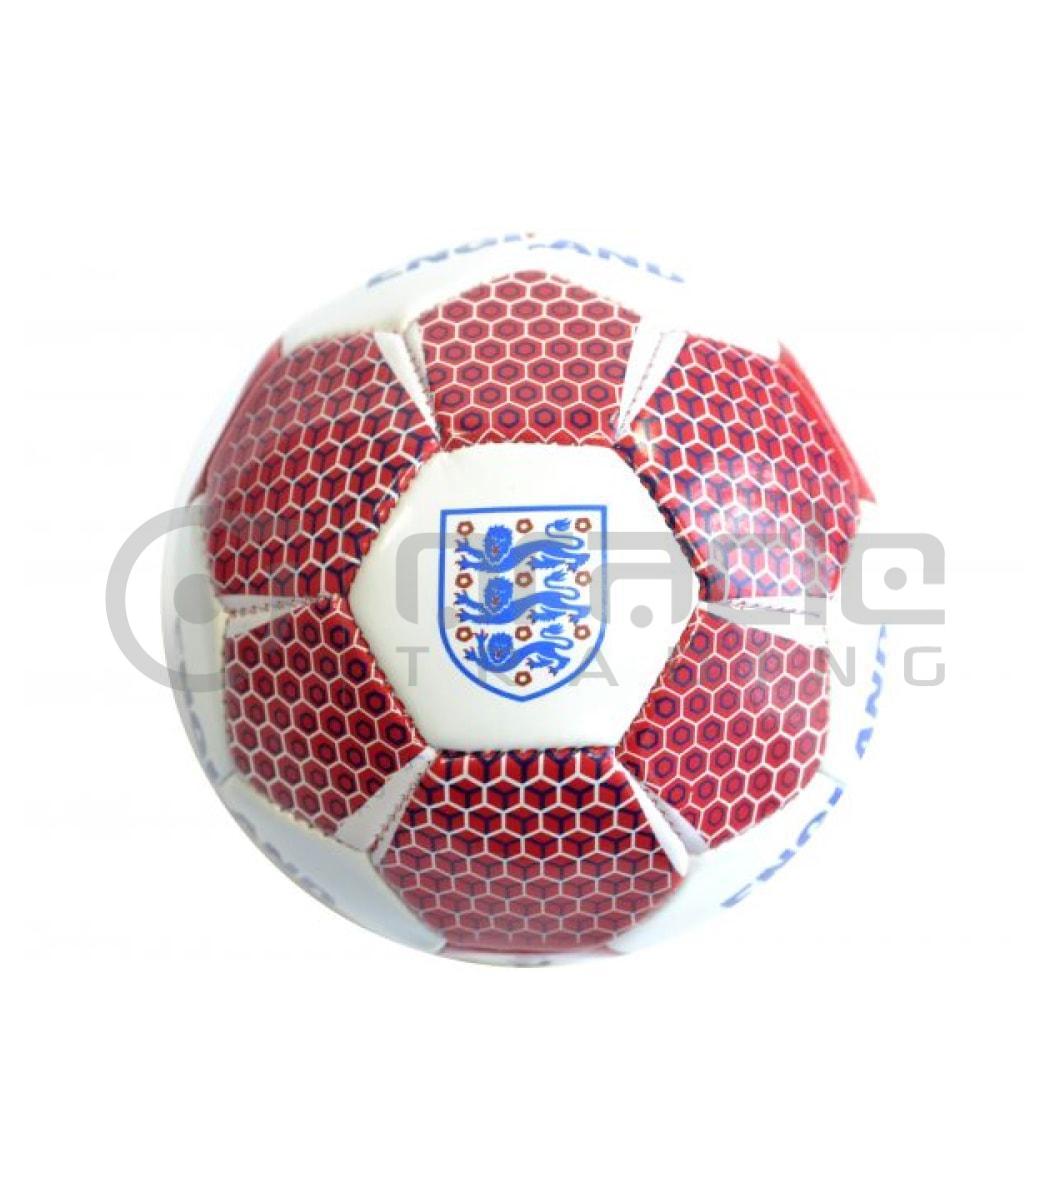 small soccer ball england fa sob027 b